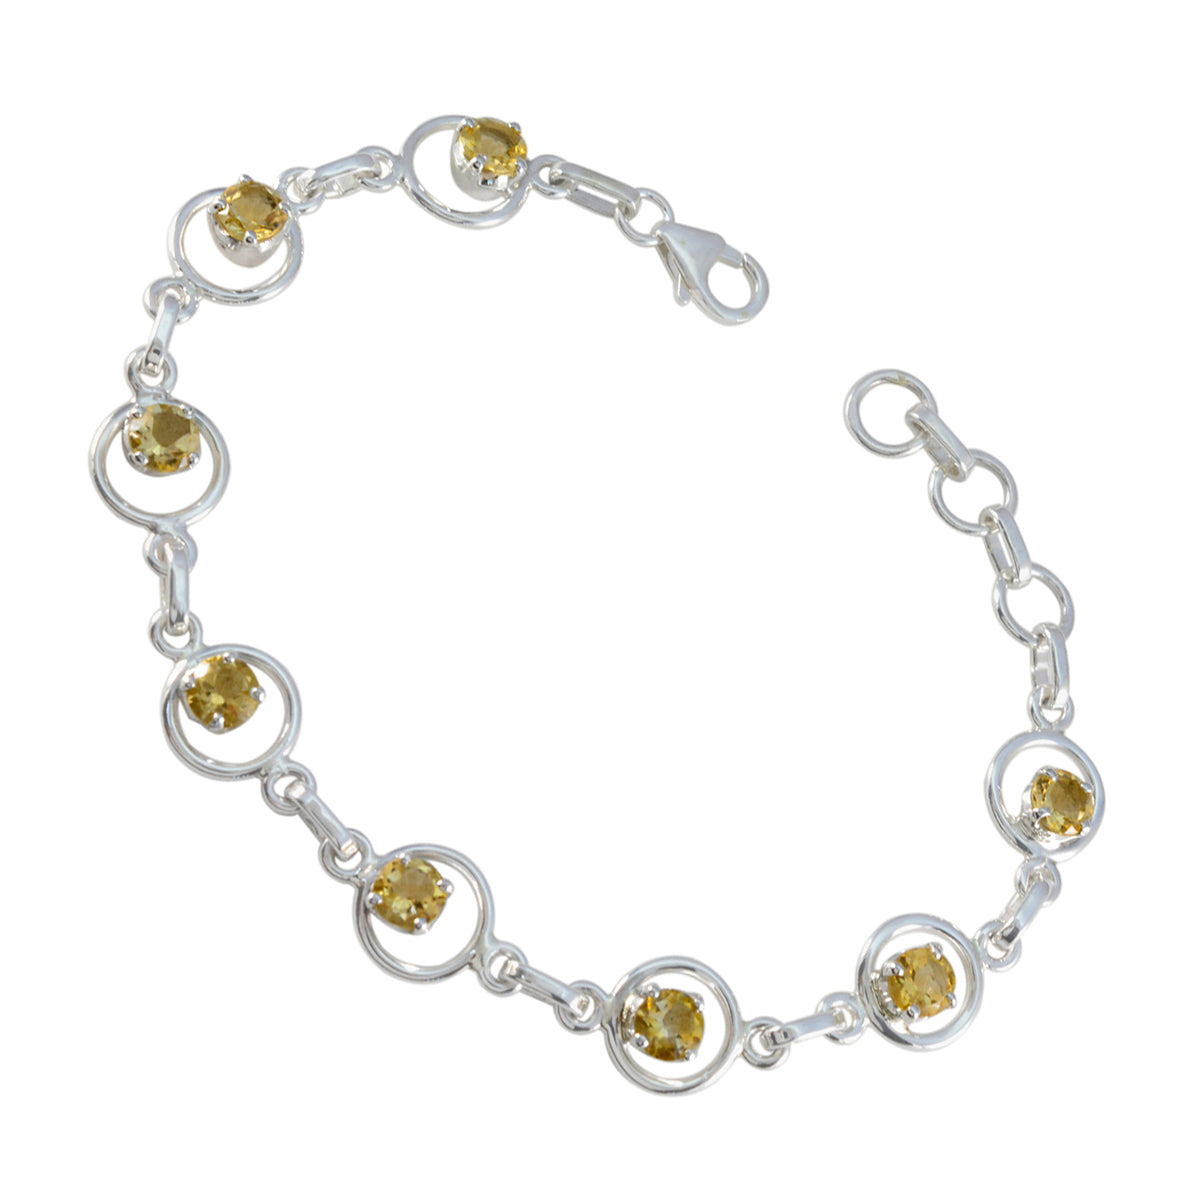 Riyo Indian 925 Sterling Silver Bracelet For Women Citrine Bracelet Prong Setting Bracelet with Fish Hook Link Charm Bracelet L Size 6-8.5 Inch.